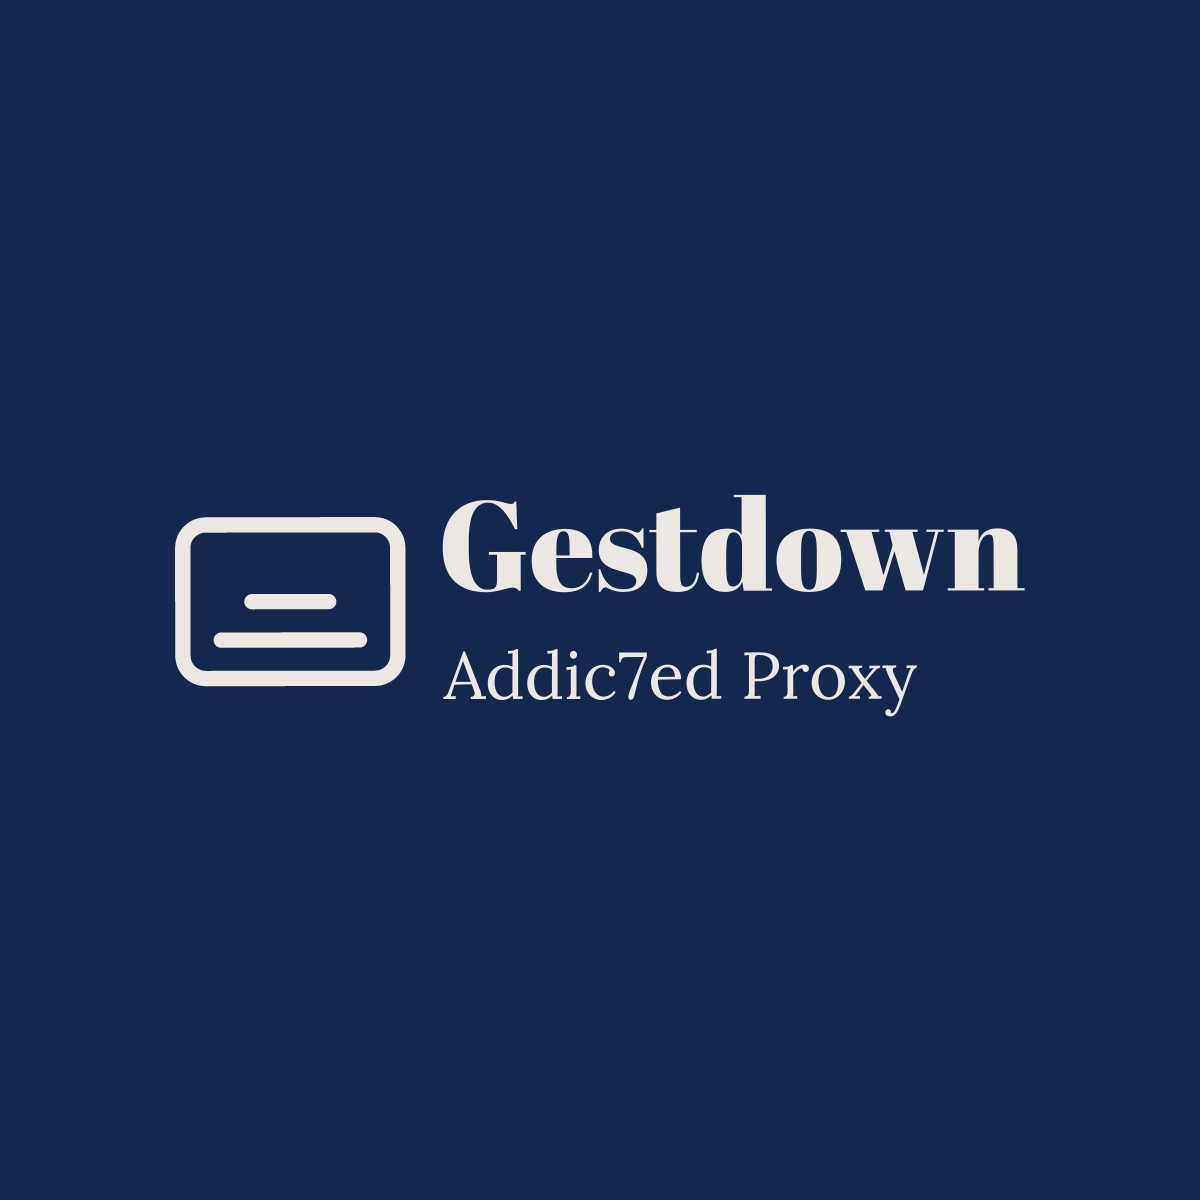 (c) Gestdown.info